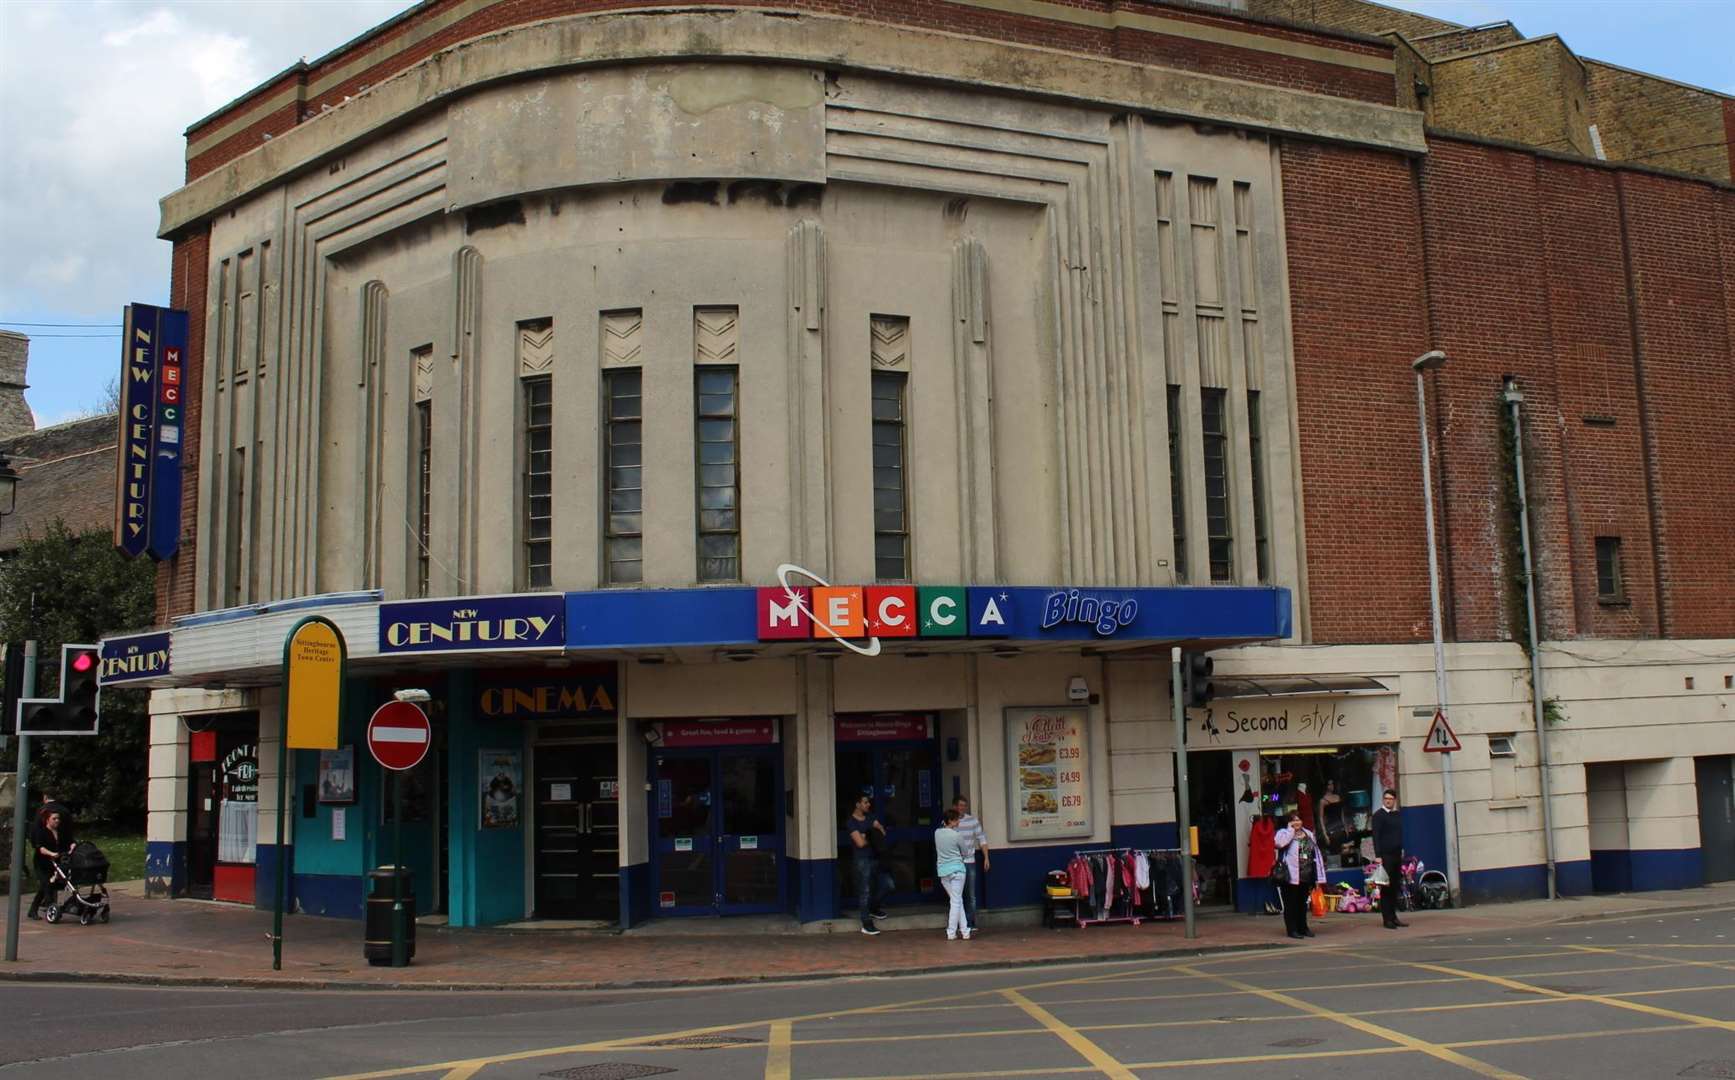 The New Century cinema in Sittingbourne